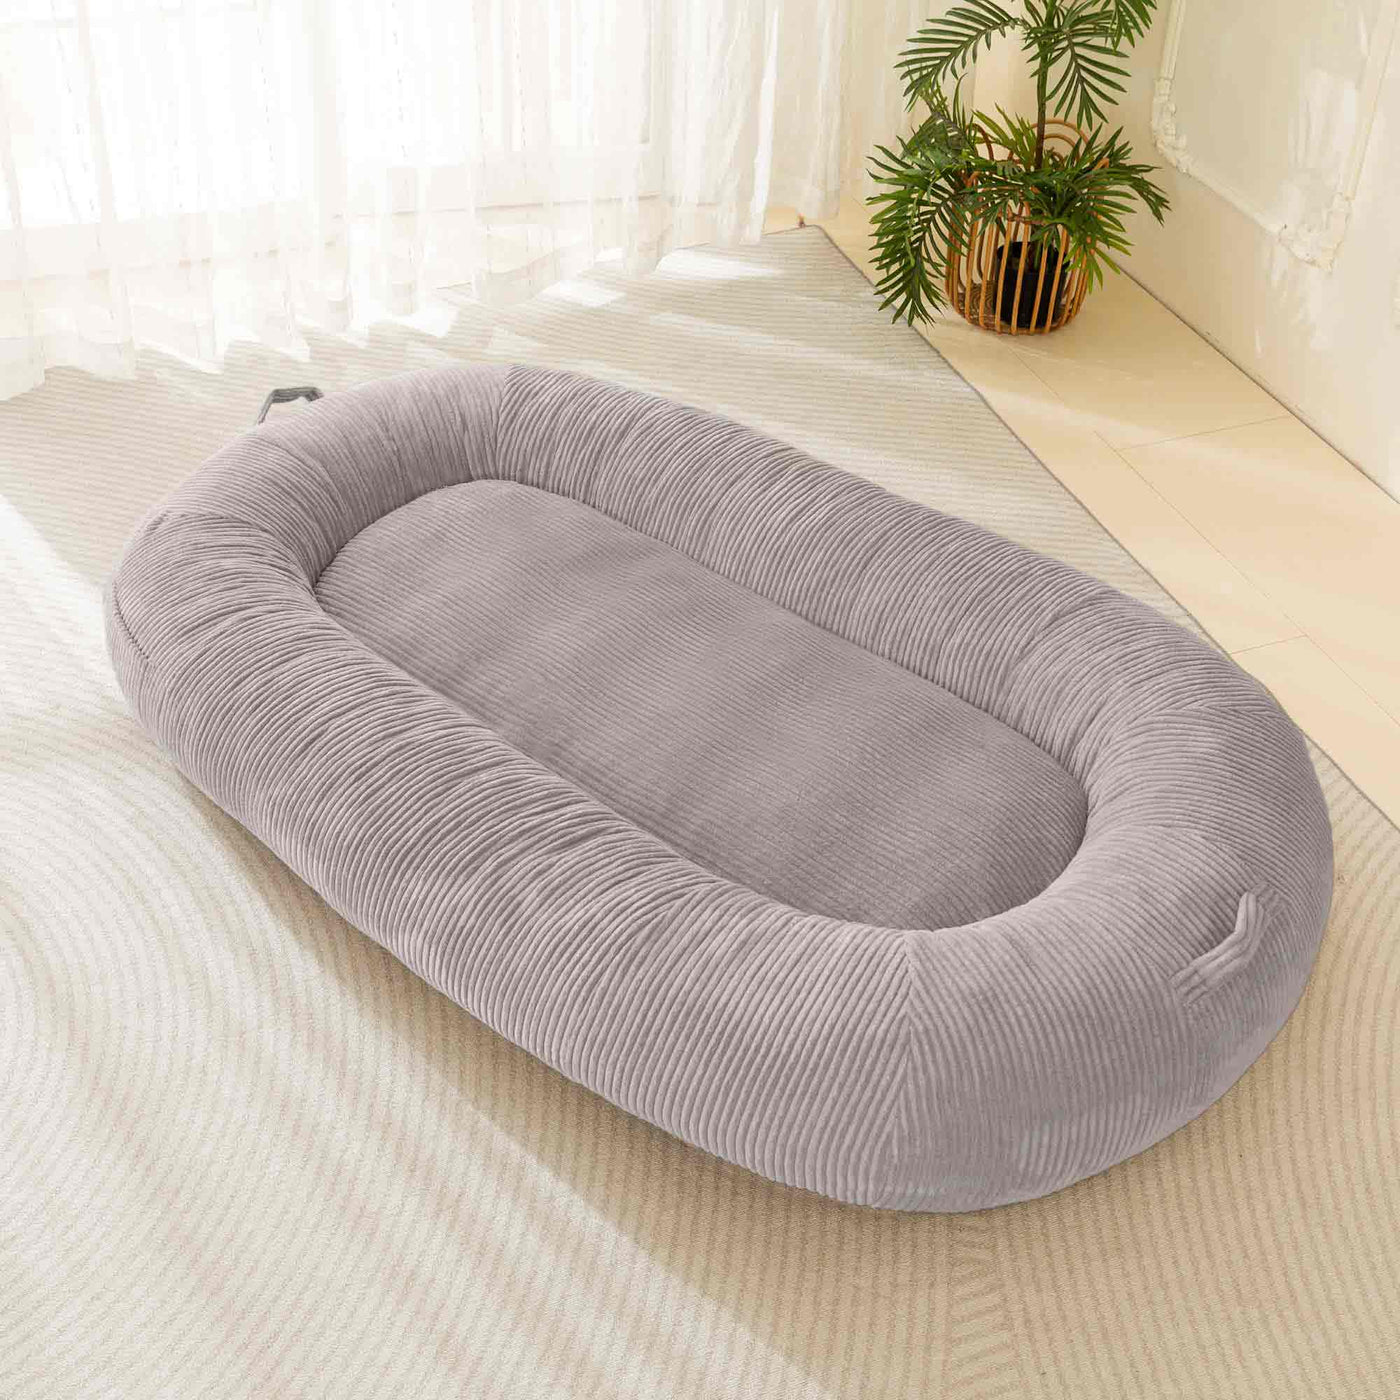 MAXYOYO Human Dog Bed, Corduroy Giant Bean Bag Dog Bed for Humans and Pets, Grey